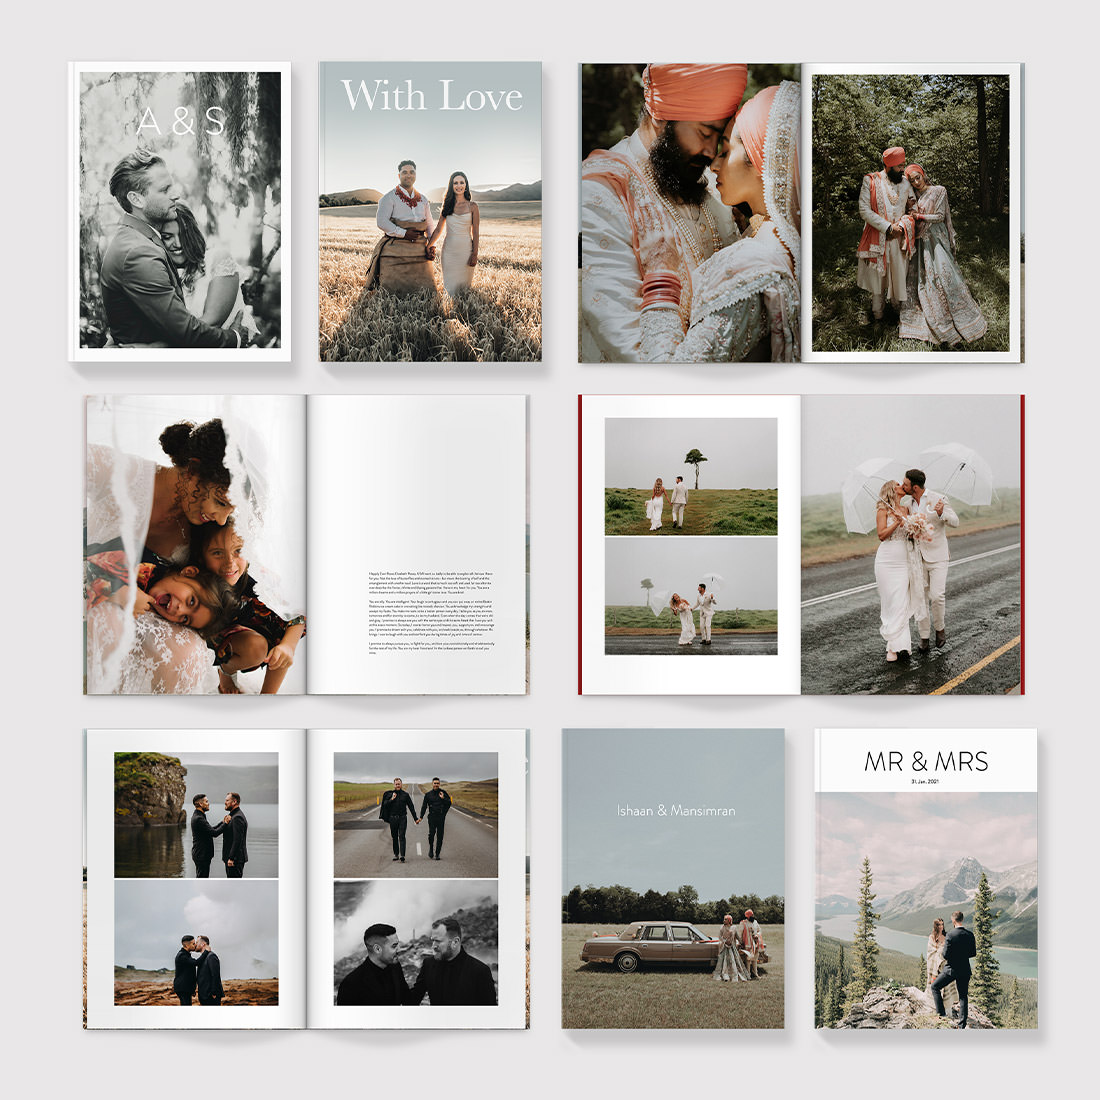 Multiple wedding magazines showcasing image template options